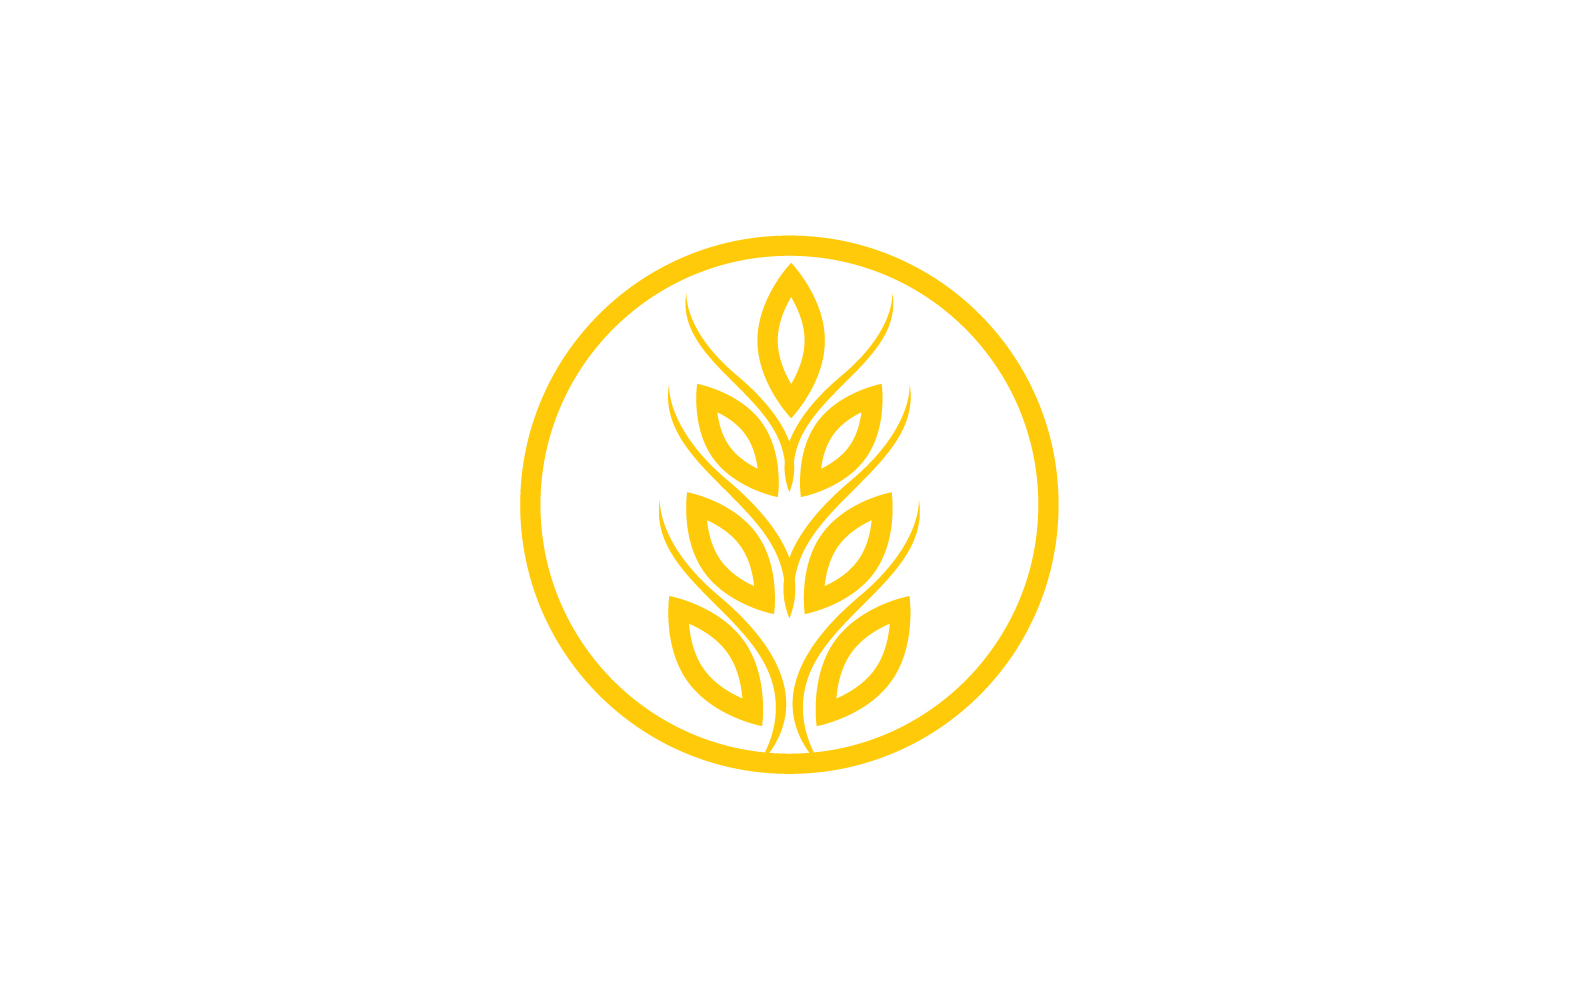 Wheat rice oat food logo design v6